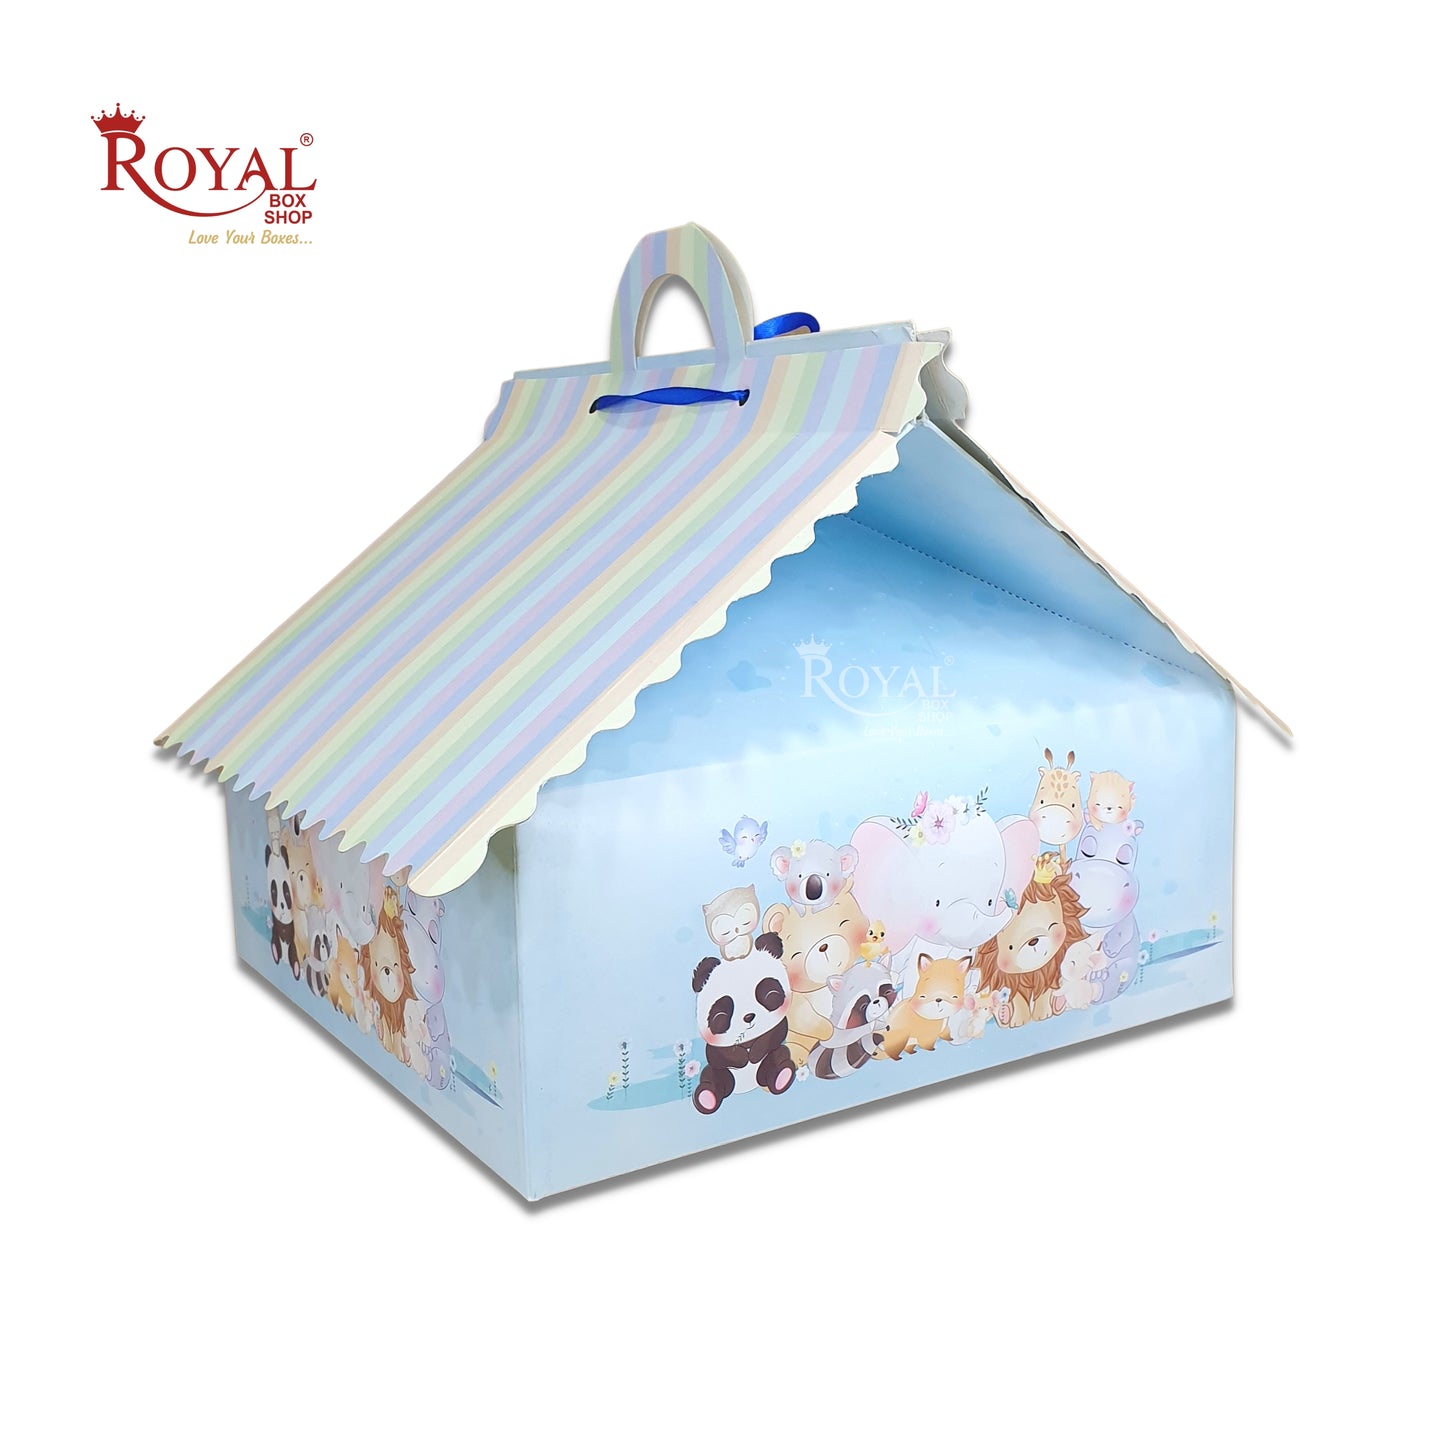 RoyalBoxShop® 9cc Hut Shape Cupcake Boxes I 10"x10"x4" inch I Zoo Theme